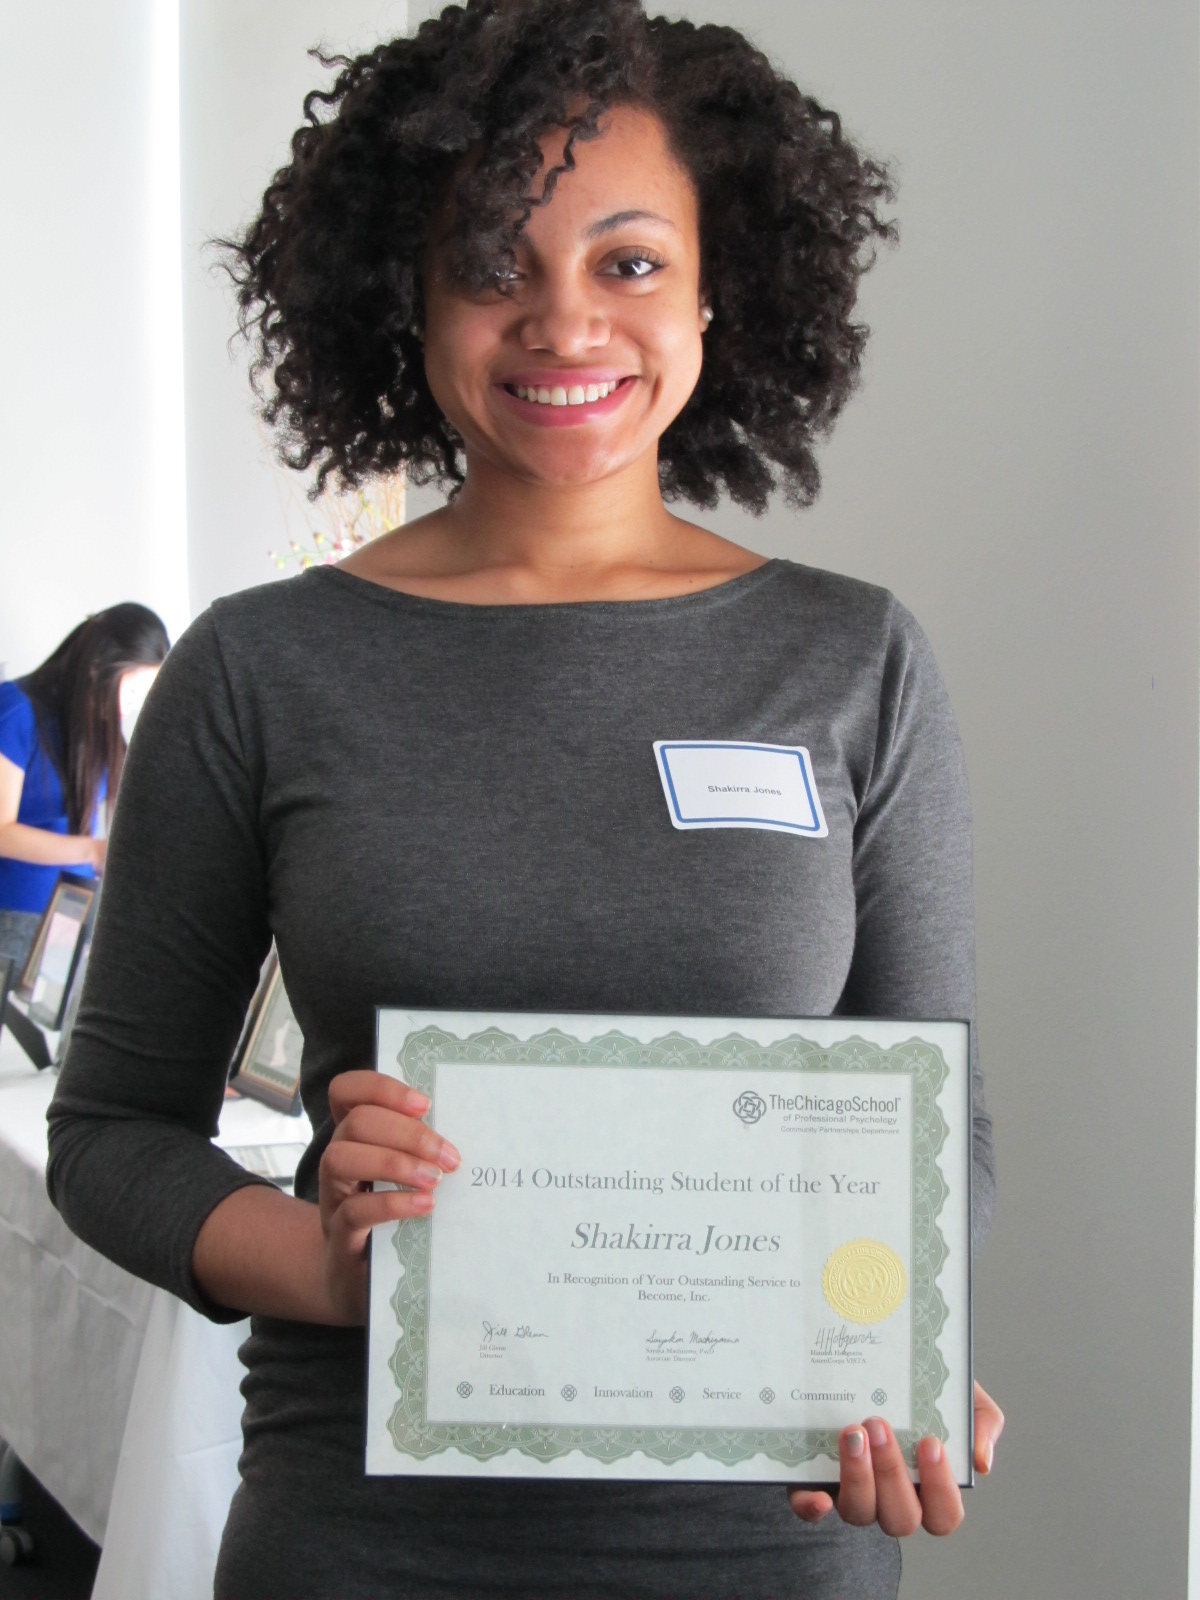 Outstanding Student Award - Shakirra Jones